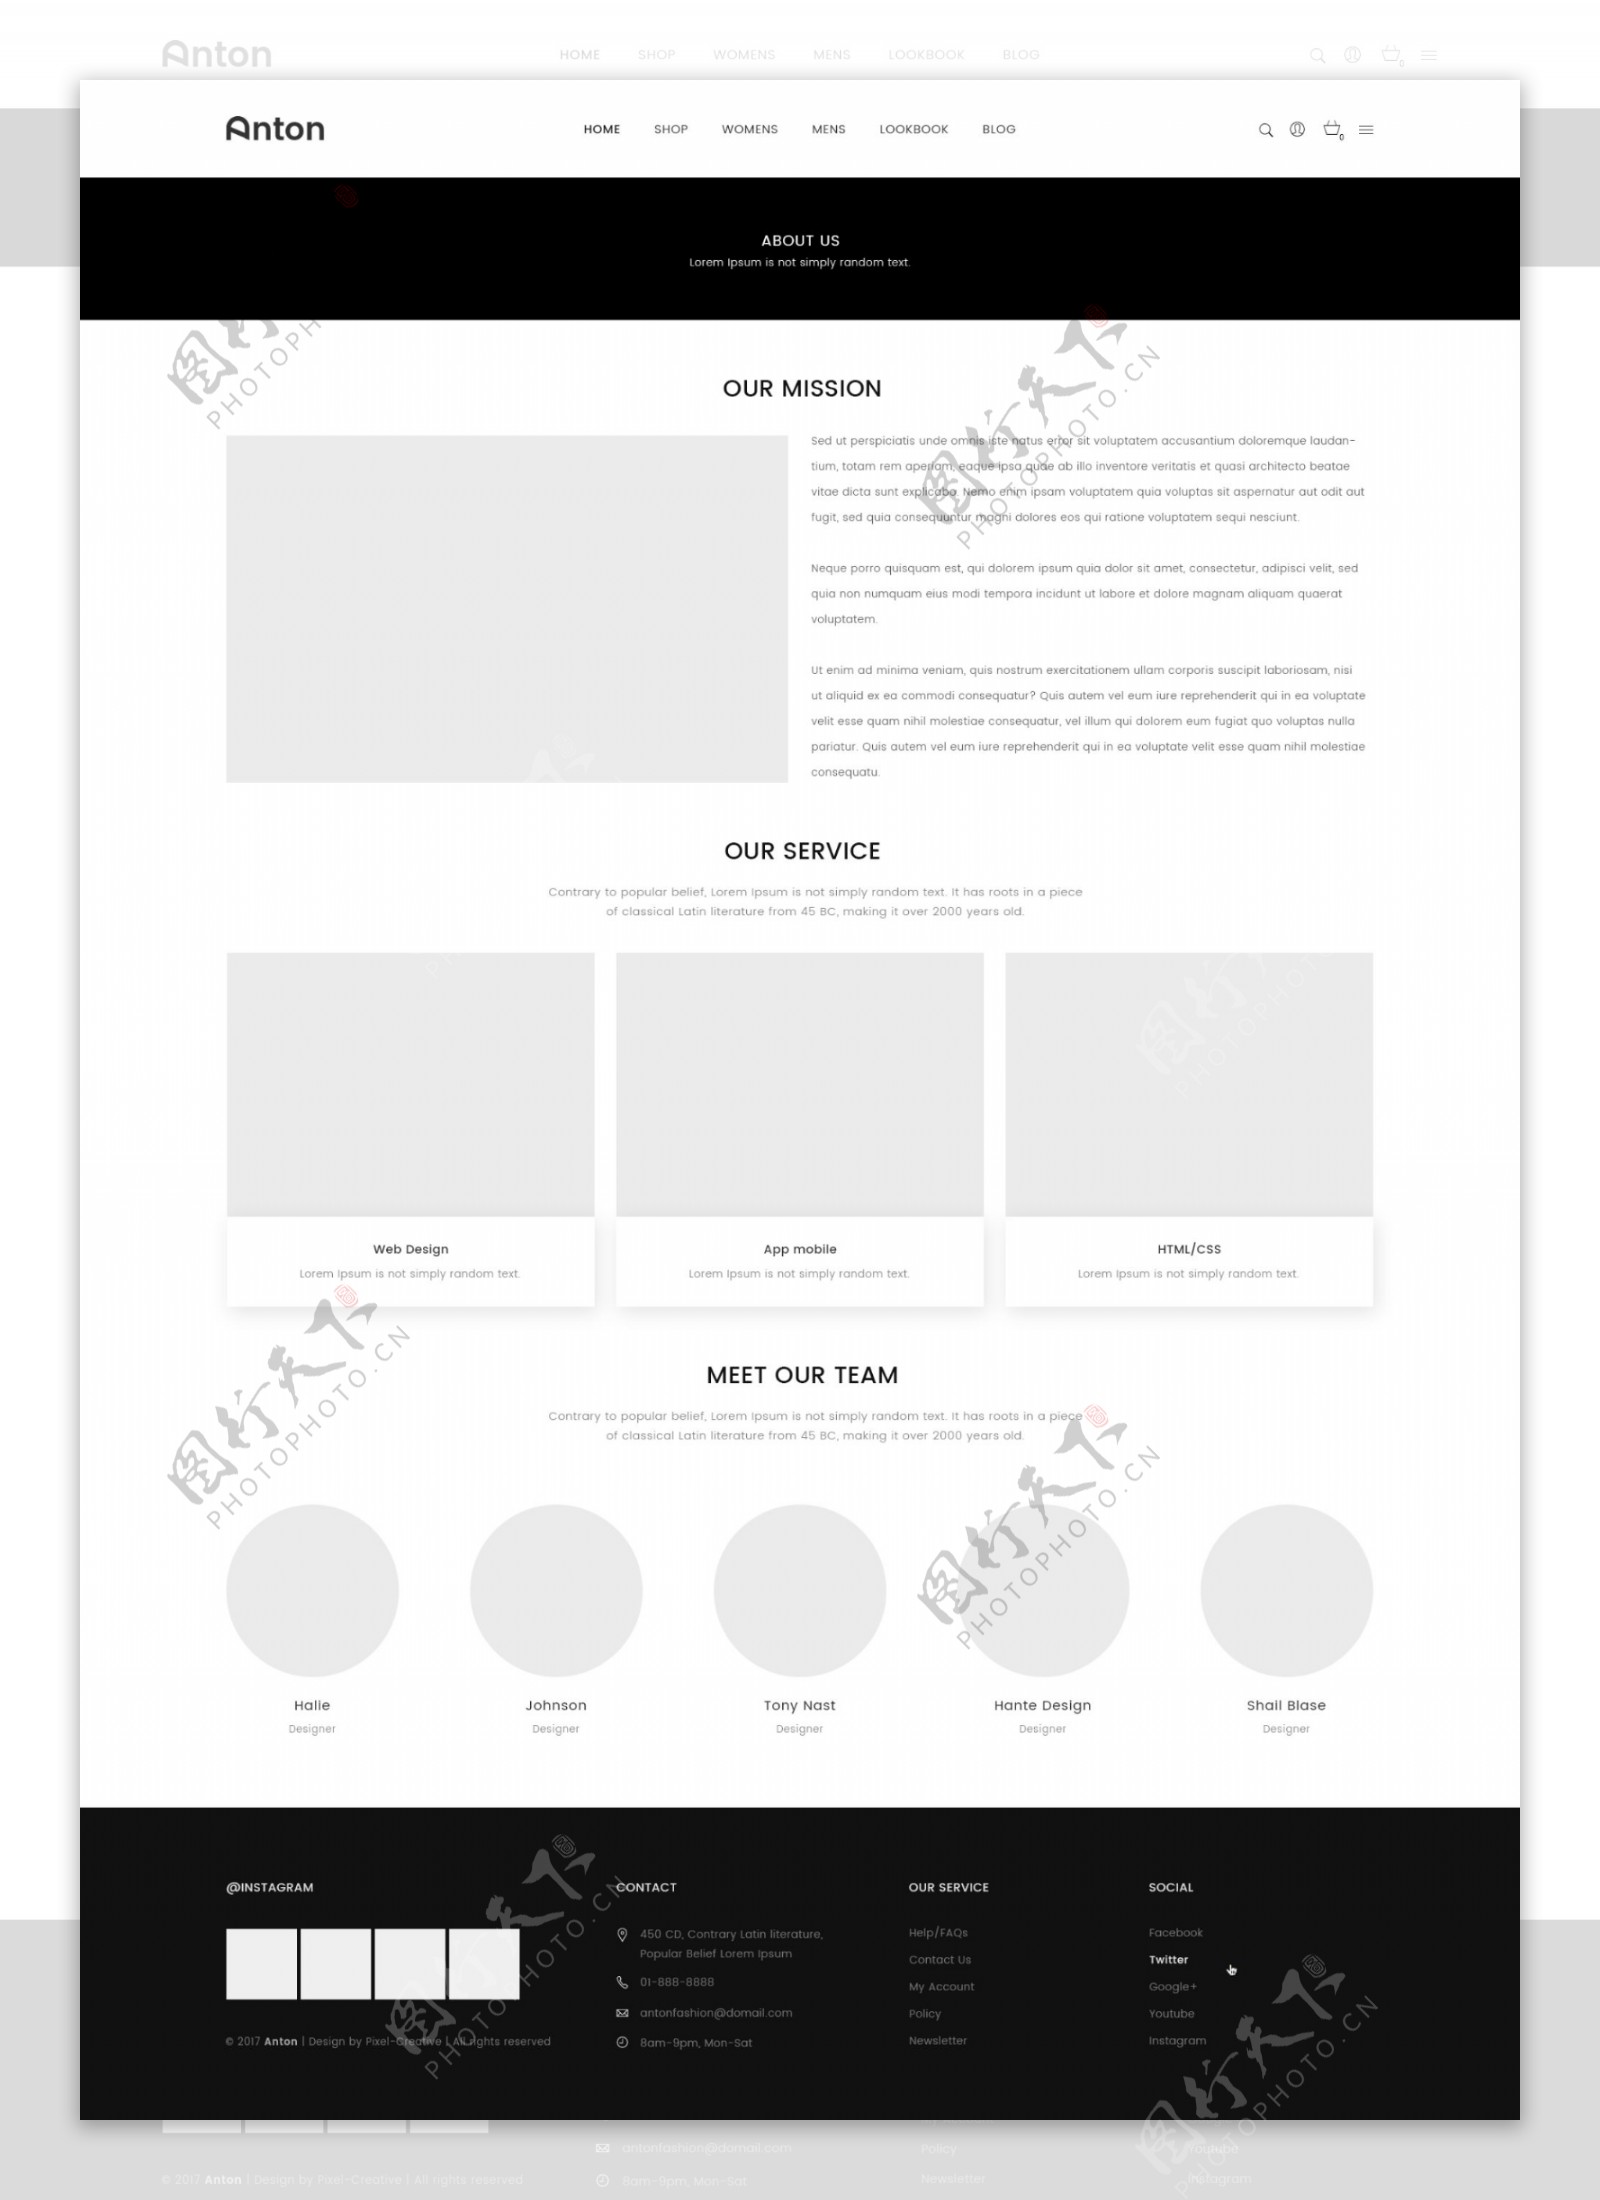 UI网页博客单栏黑白灰简洁PSD模板素材图片下载-素材编号09193733-素材天下图库